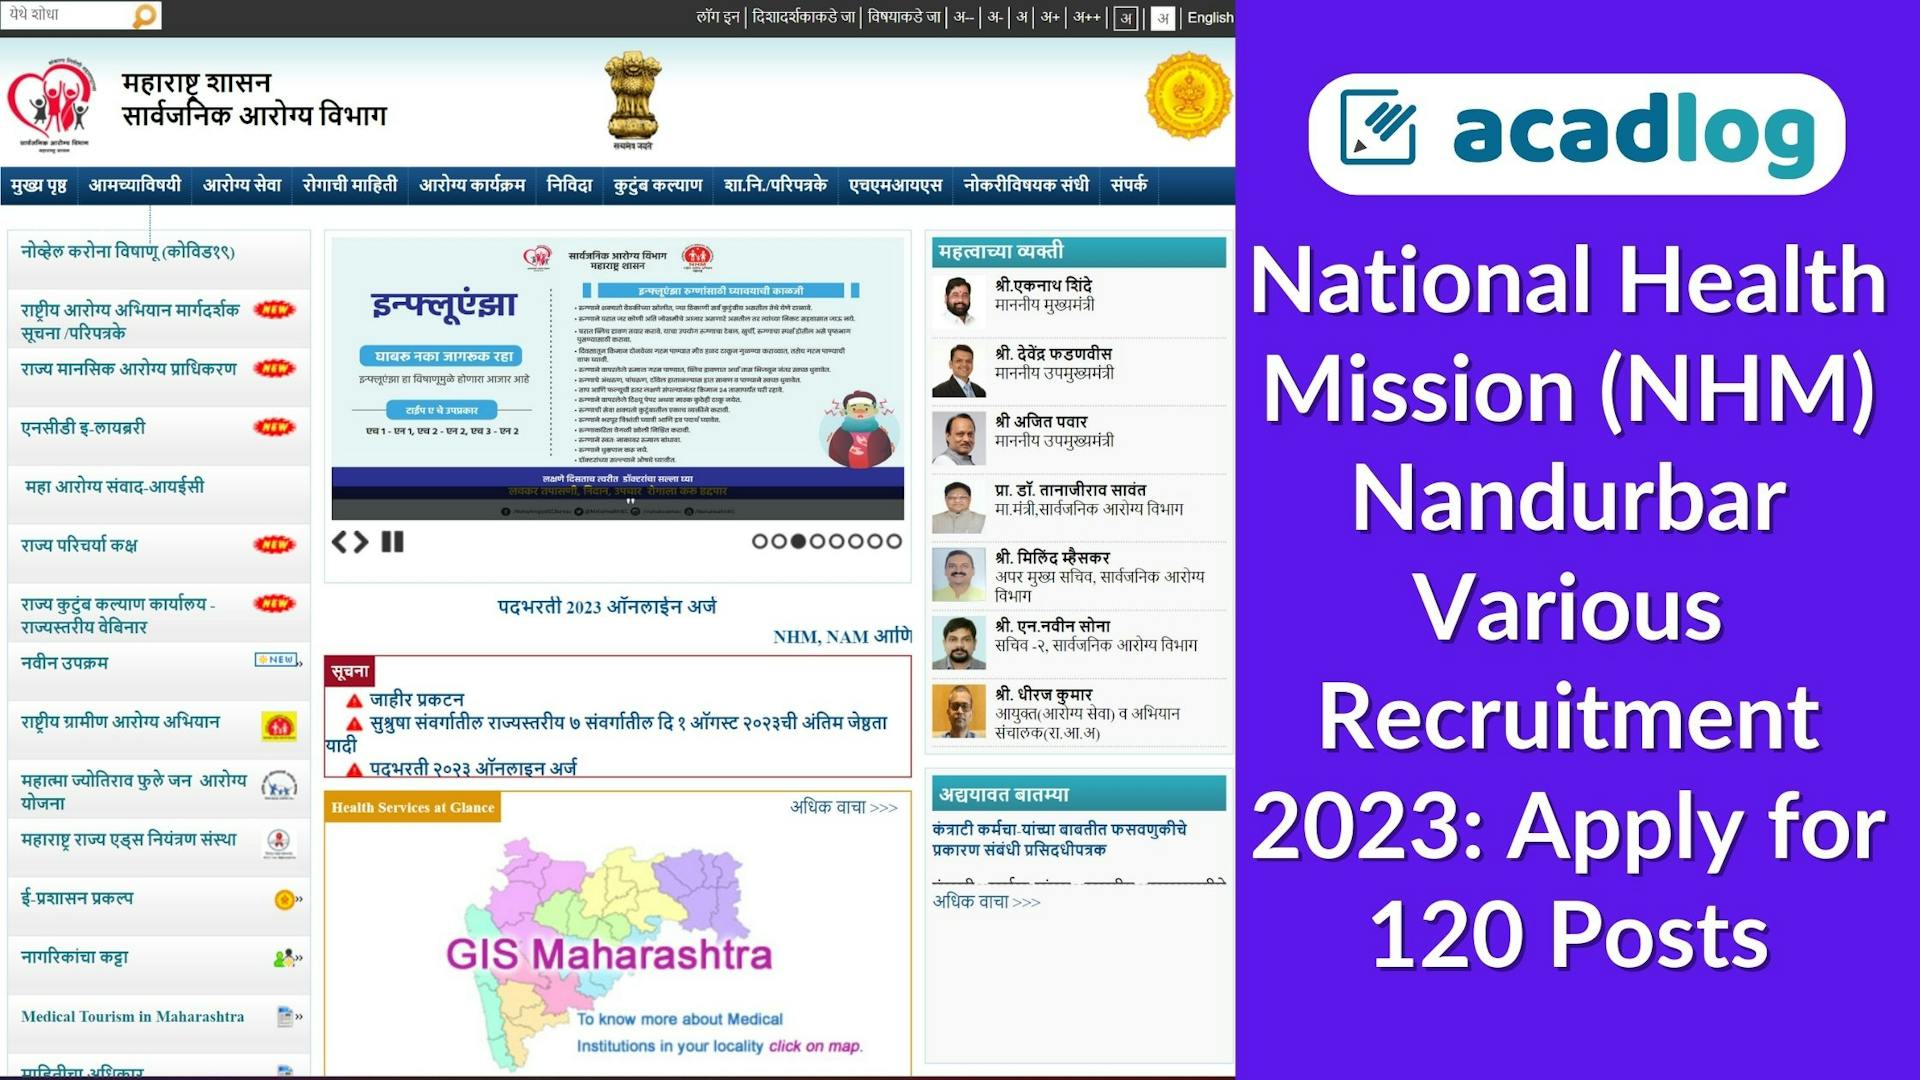 NHM Nandurbar Various Recruitment 2023: Apply for 120 Posts